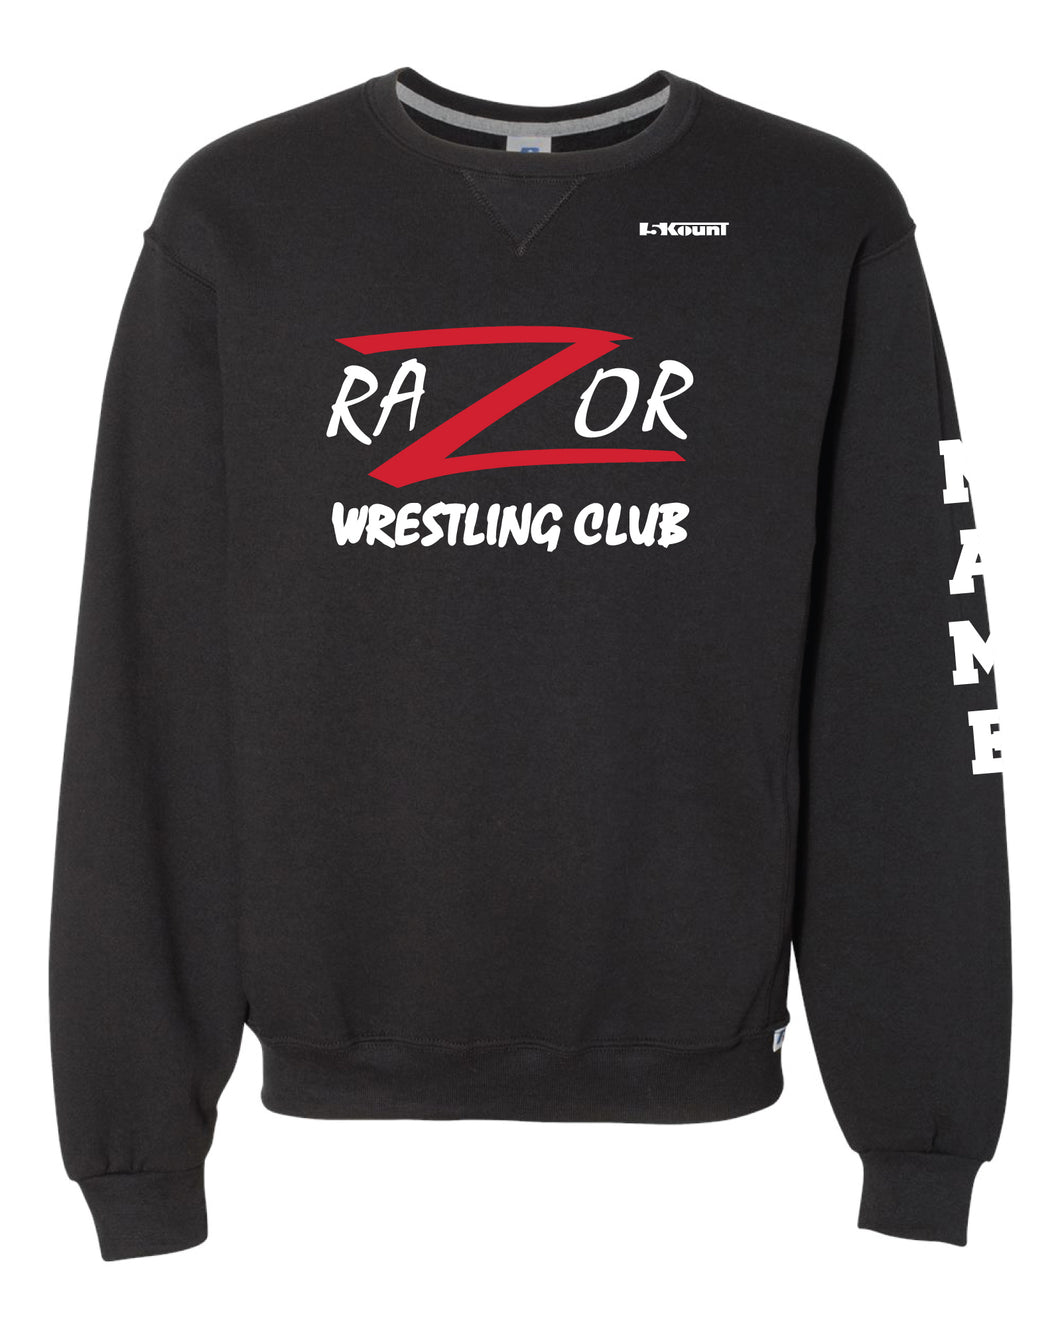 Razor Wrestling Club Russell Athletic Cotton Crewneck Sweatshirt - Black - 5KounT2018